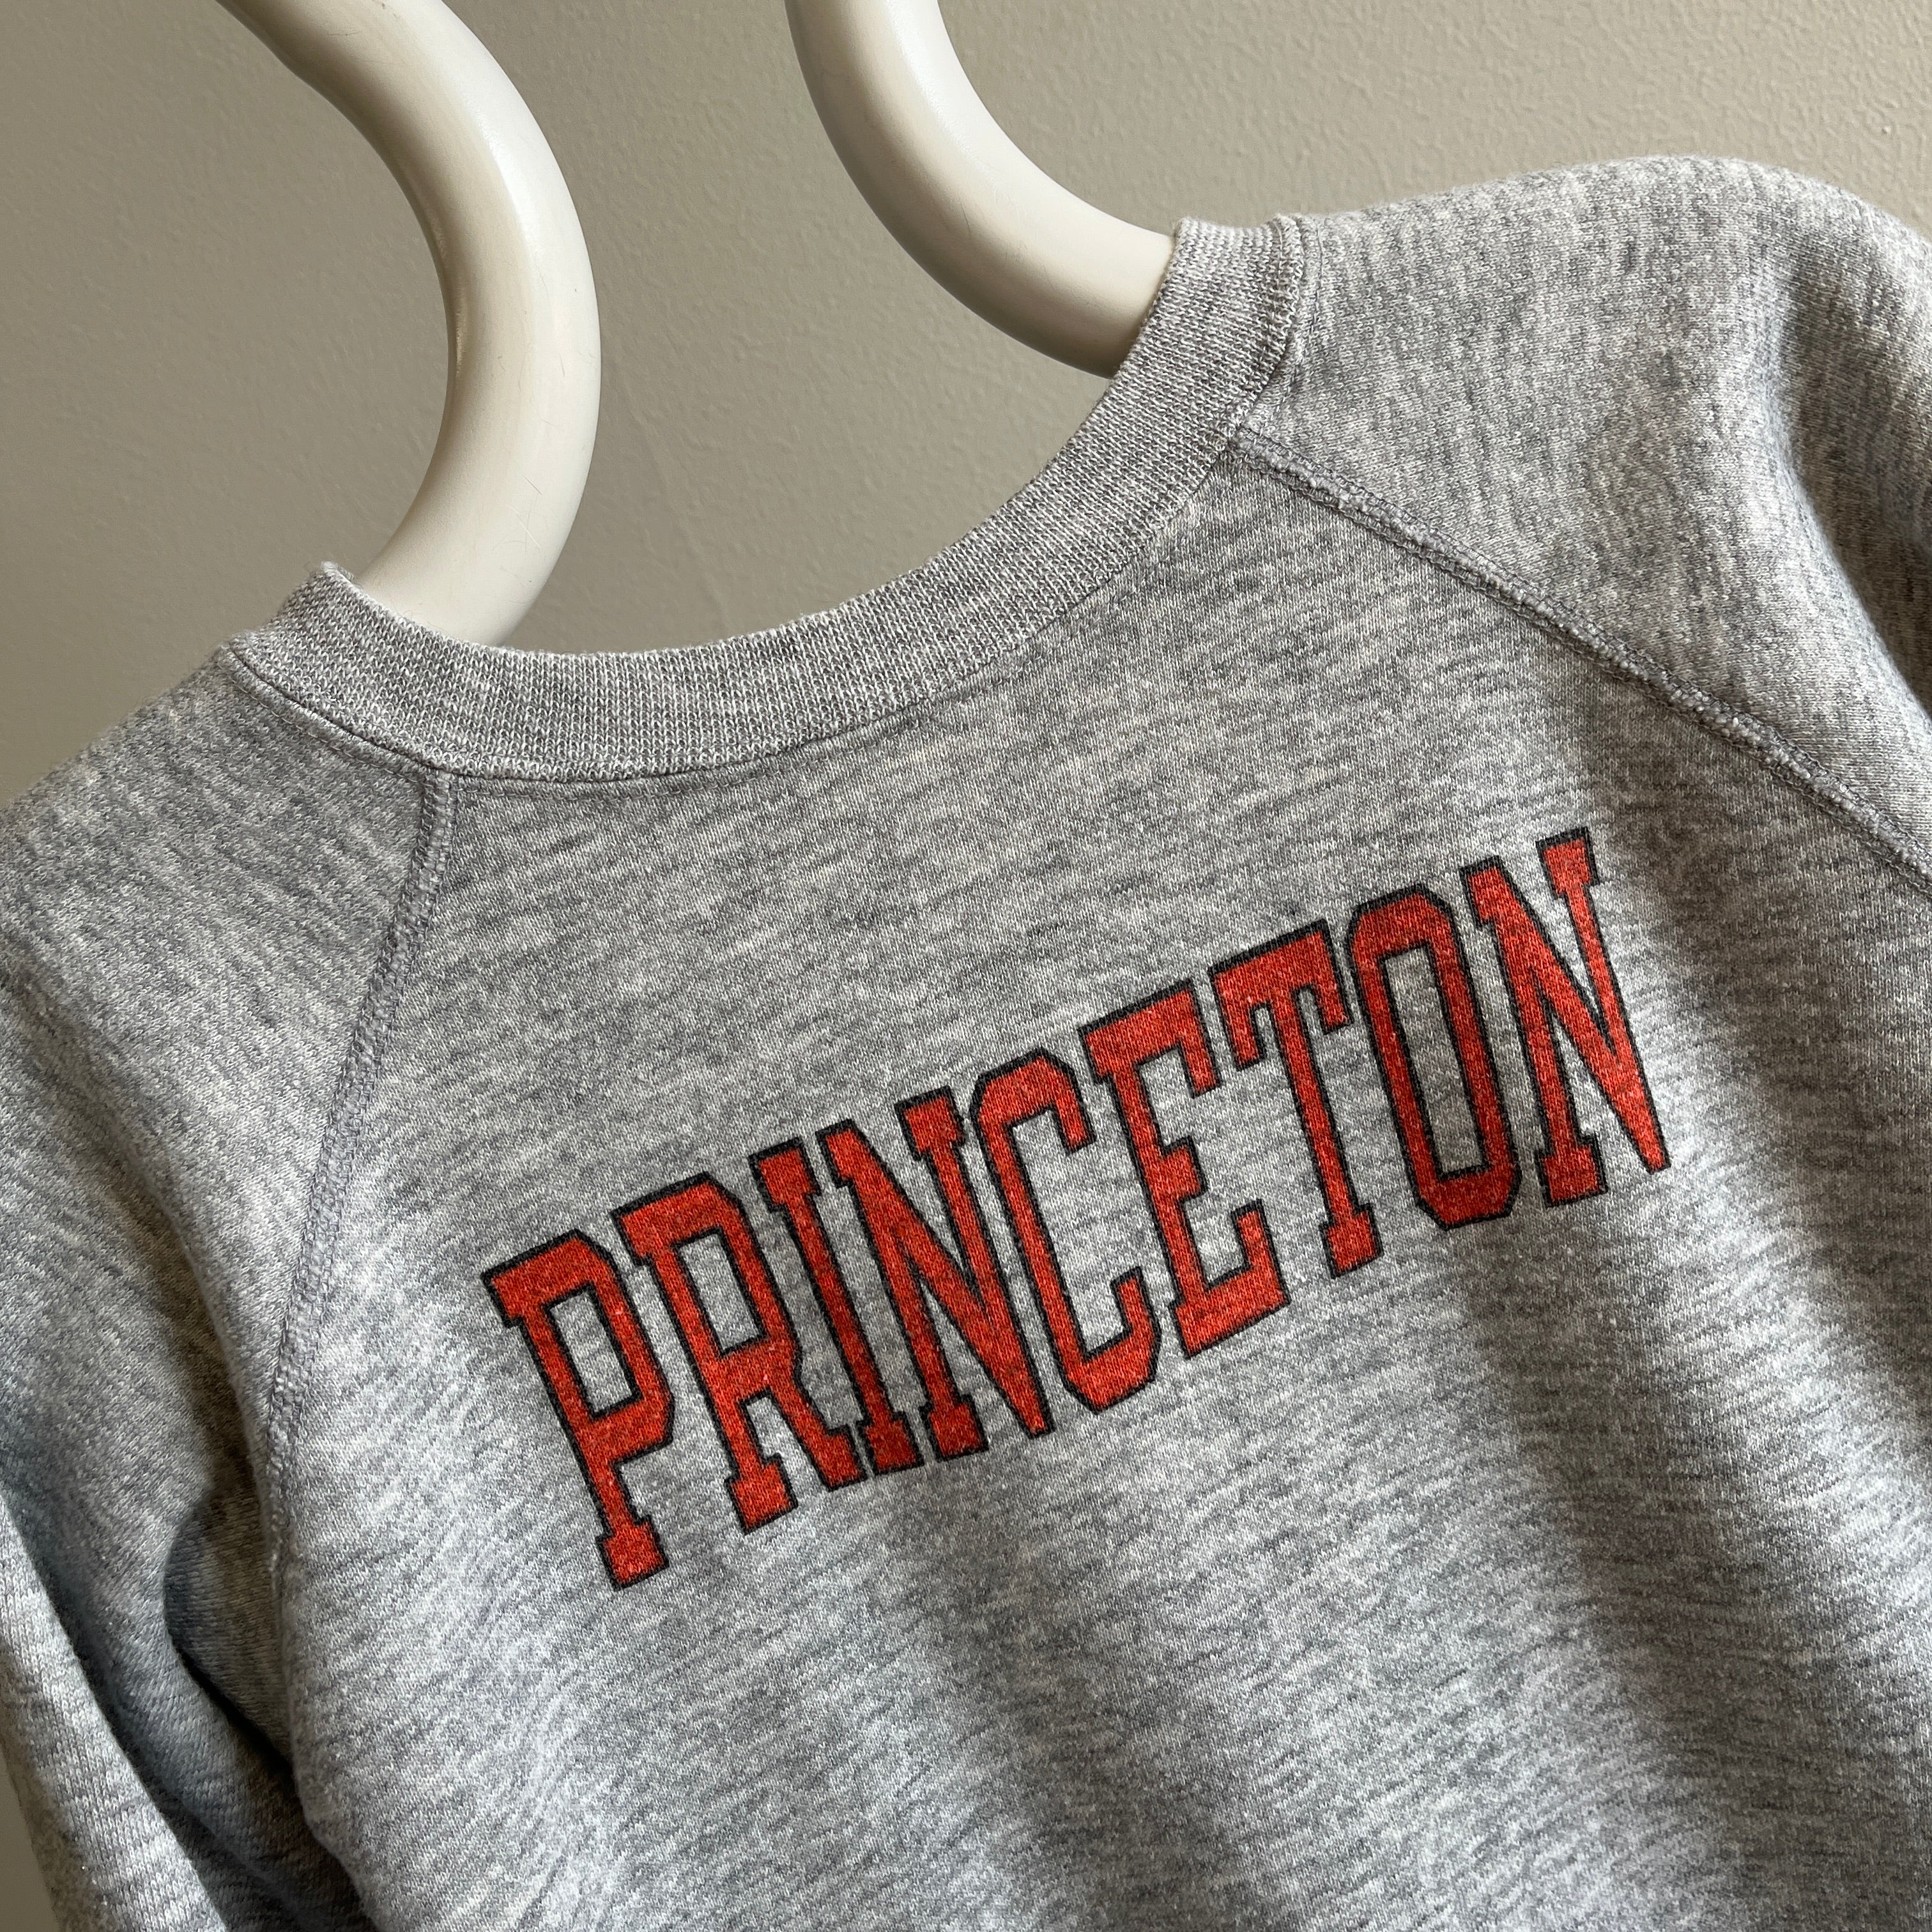 1970/80s USA Made Champion Brand Princeton Raglan Sweatshirt